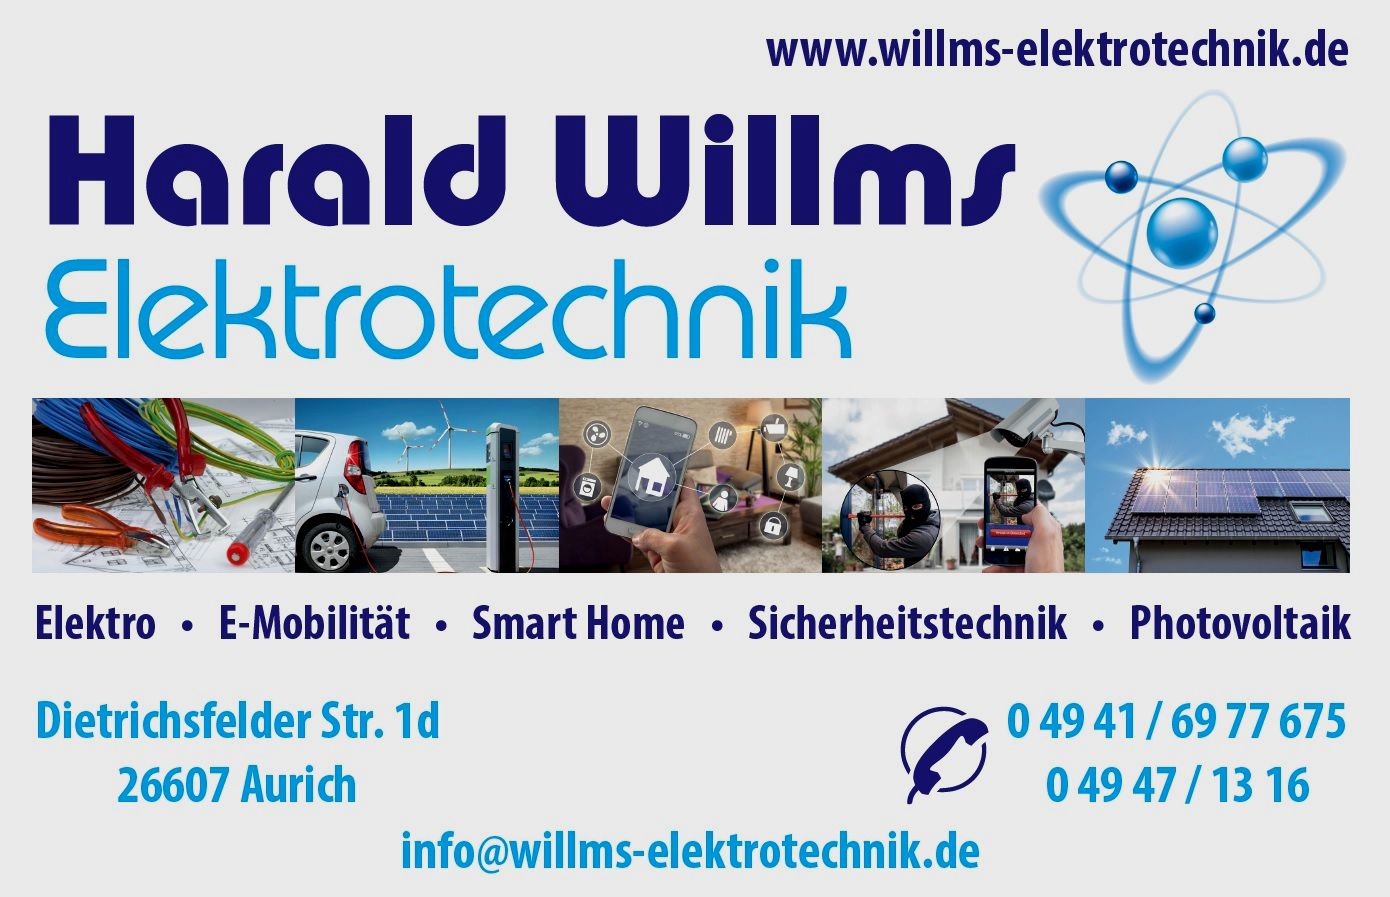 Harald Willms Elektrotechnik